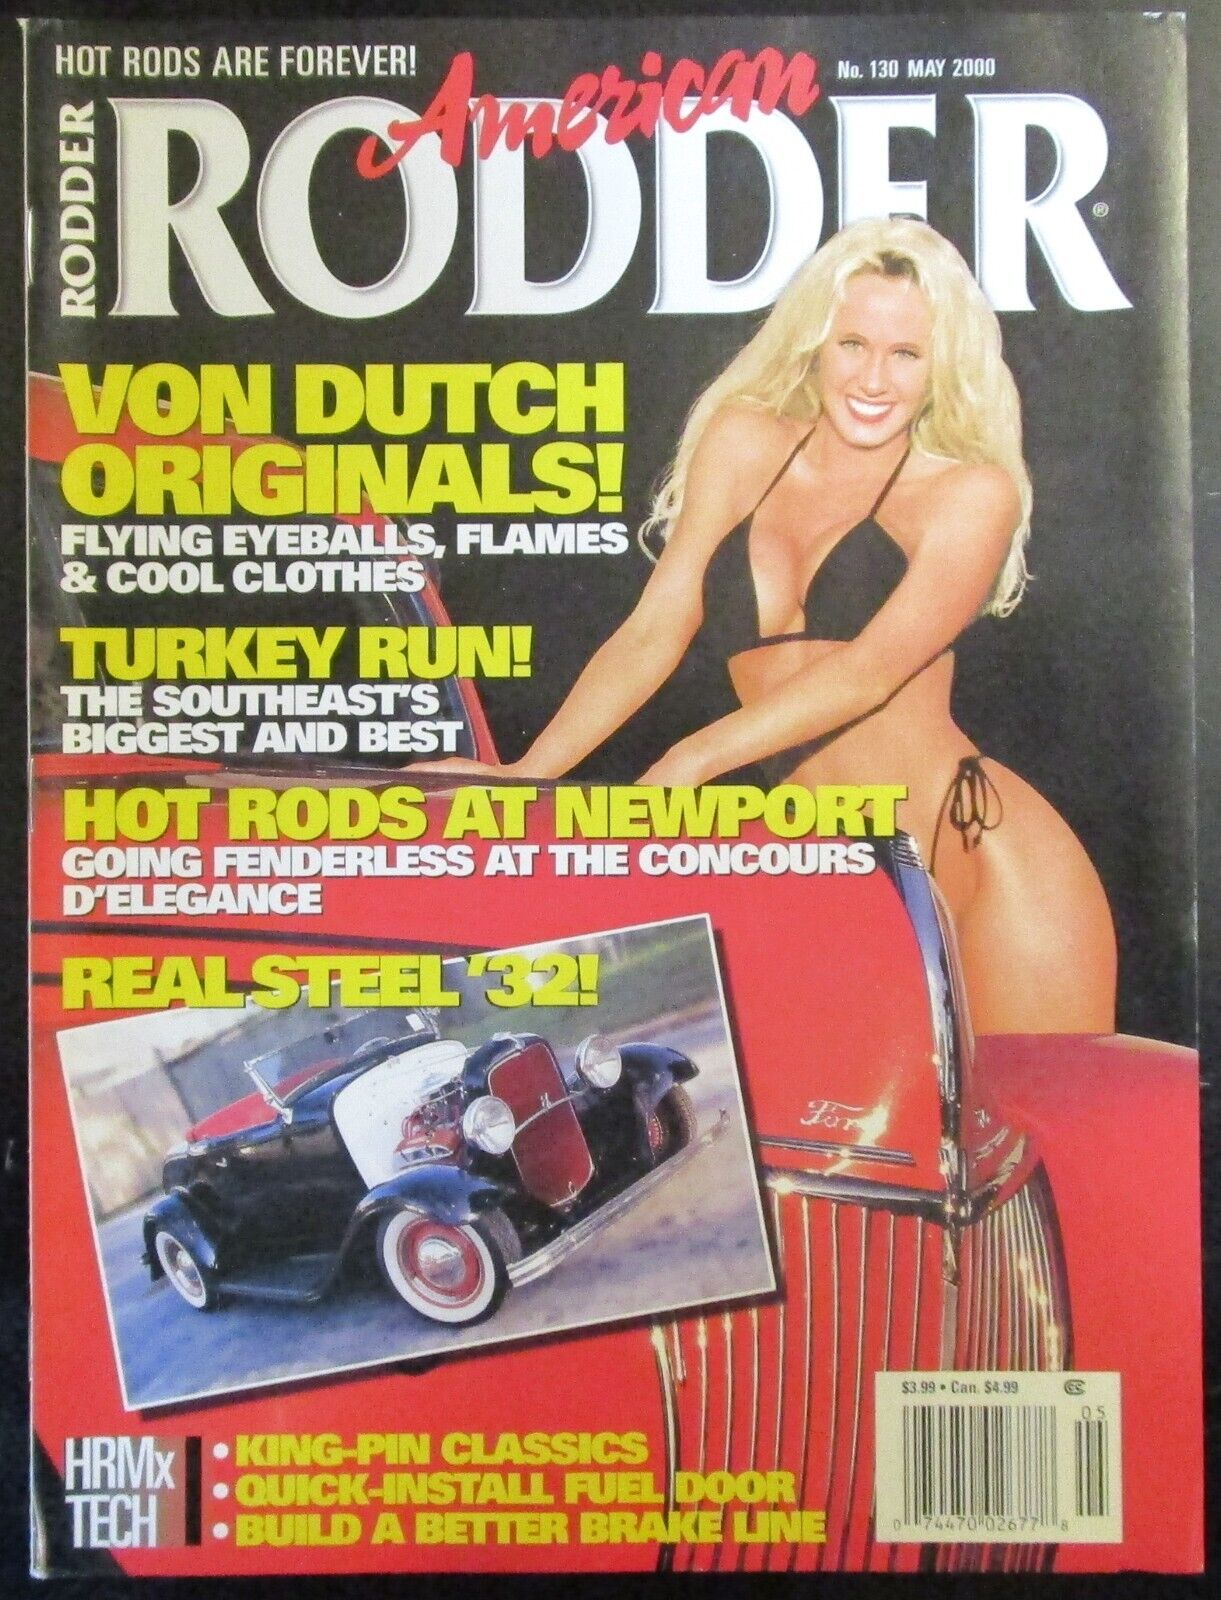 American Rodder Magazine May 2000 Issue #130